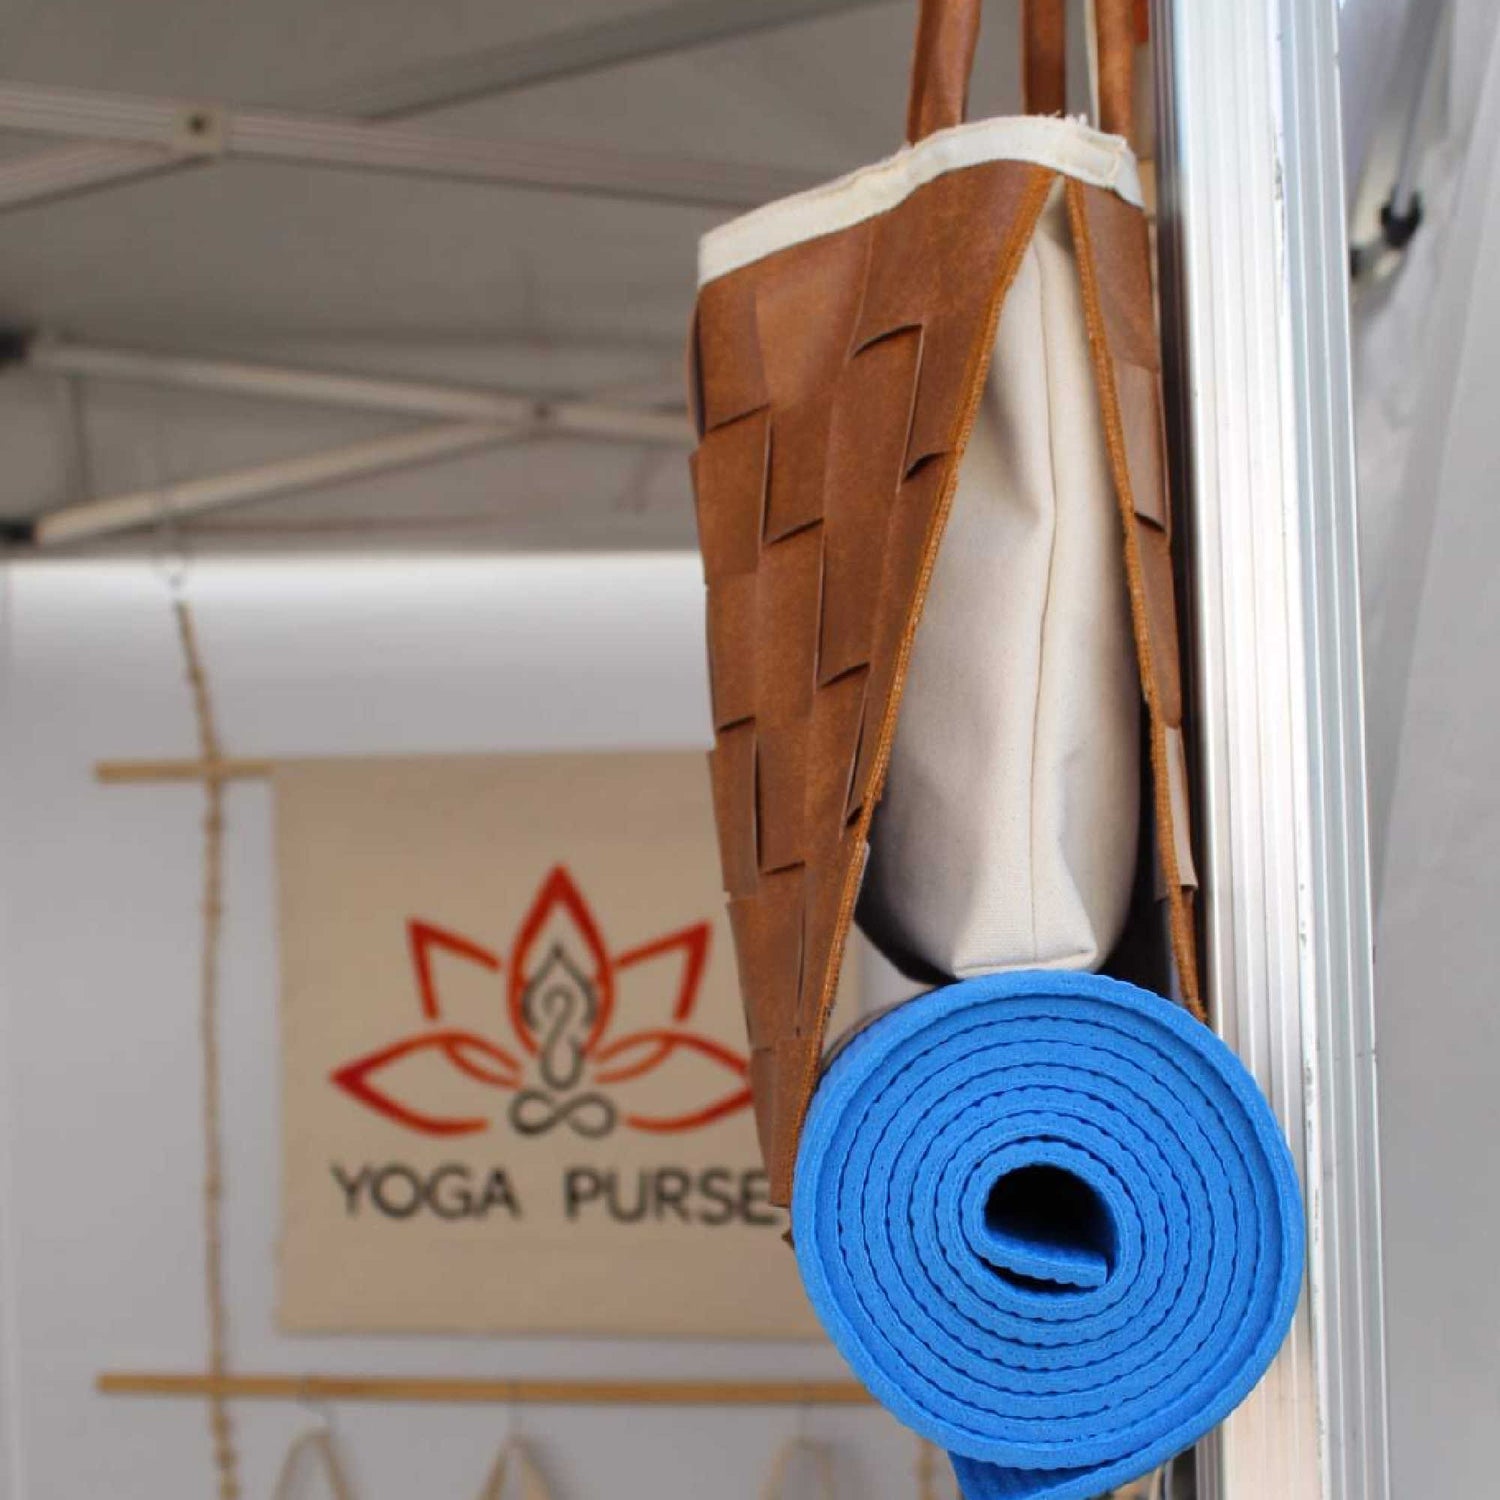 Yoga Purse Vegan Leather Woven Design - Various Color